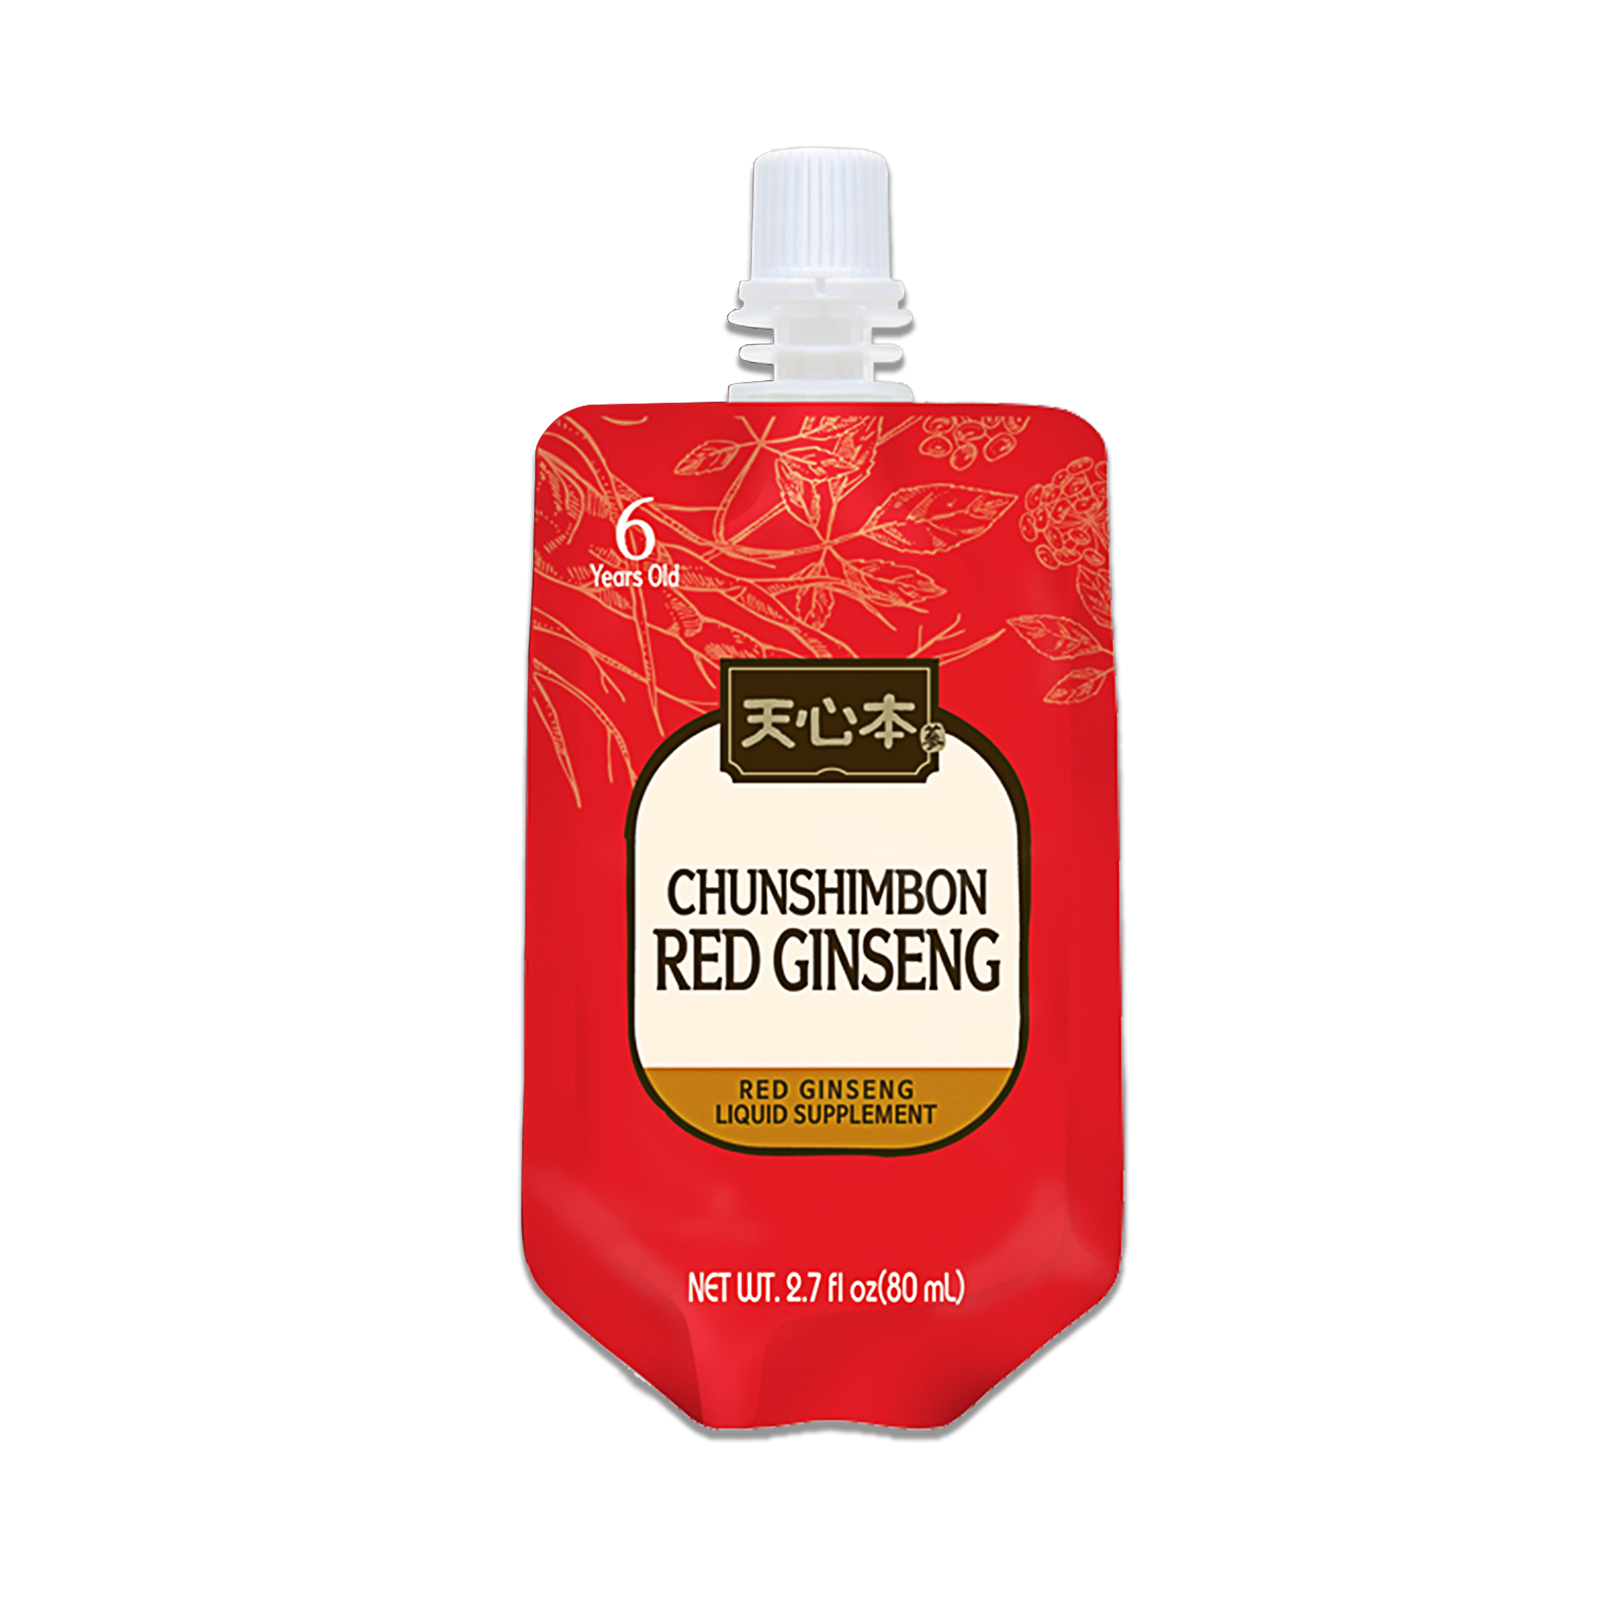 ChunShimBon Red Ginseng